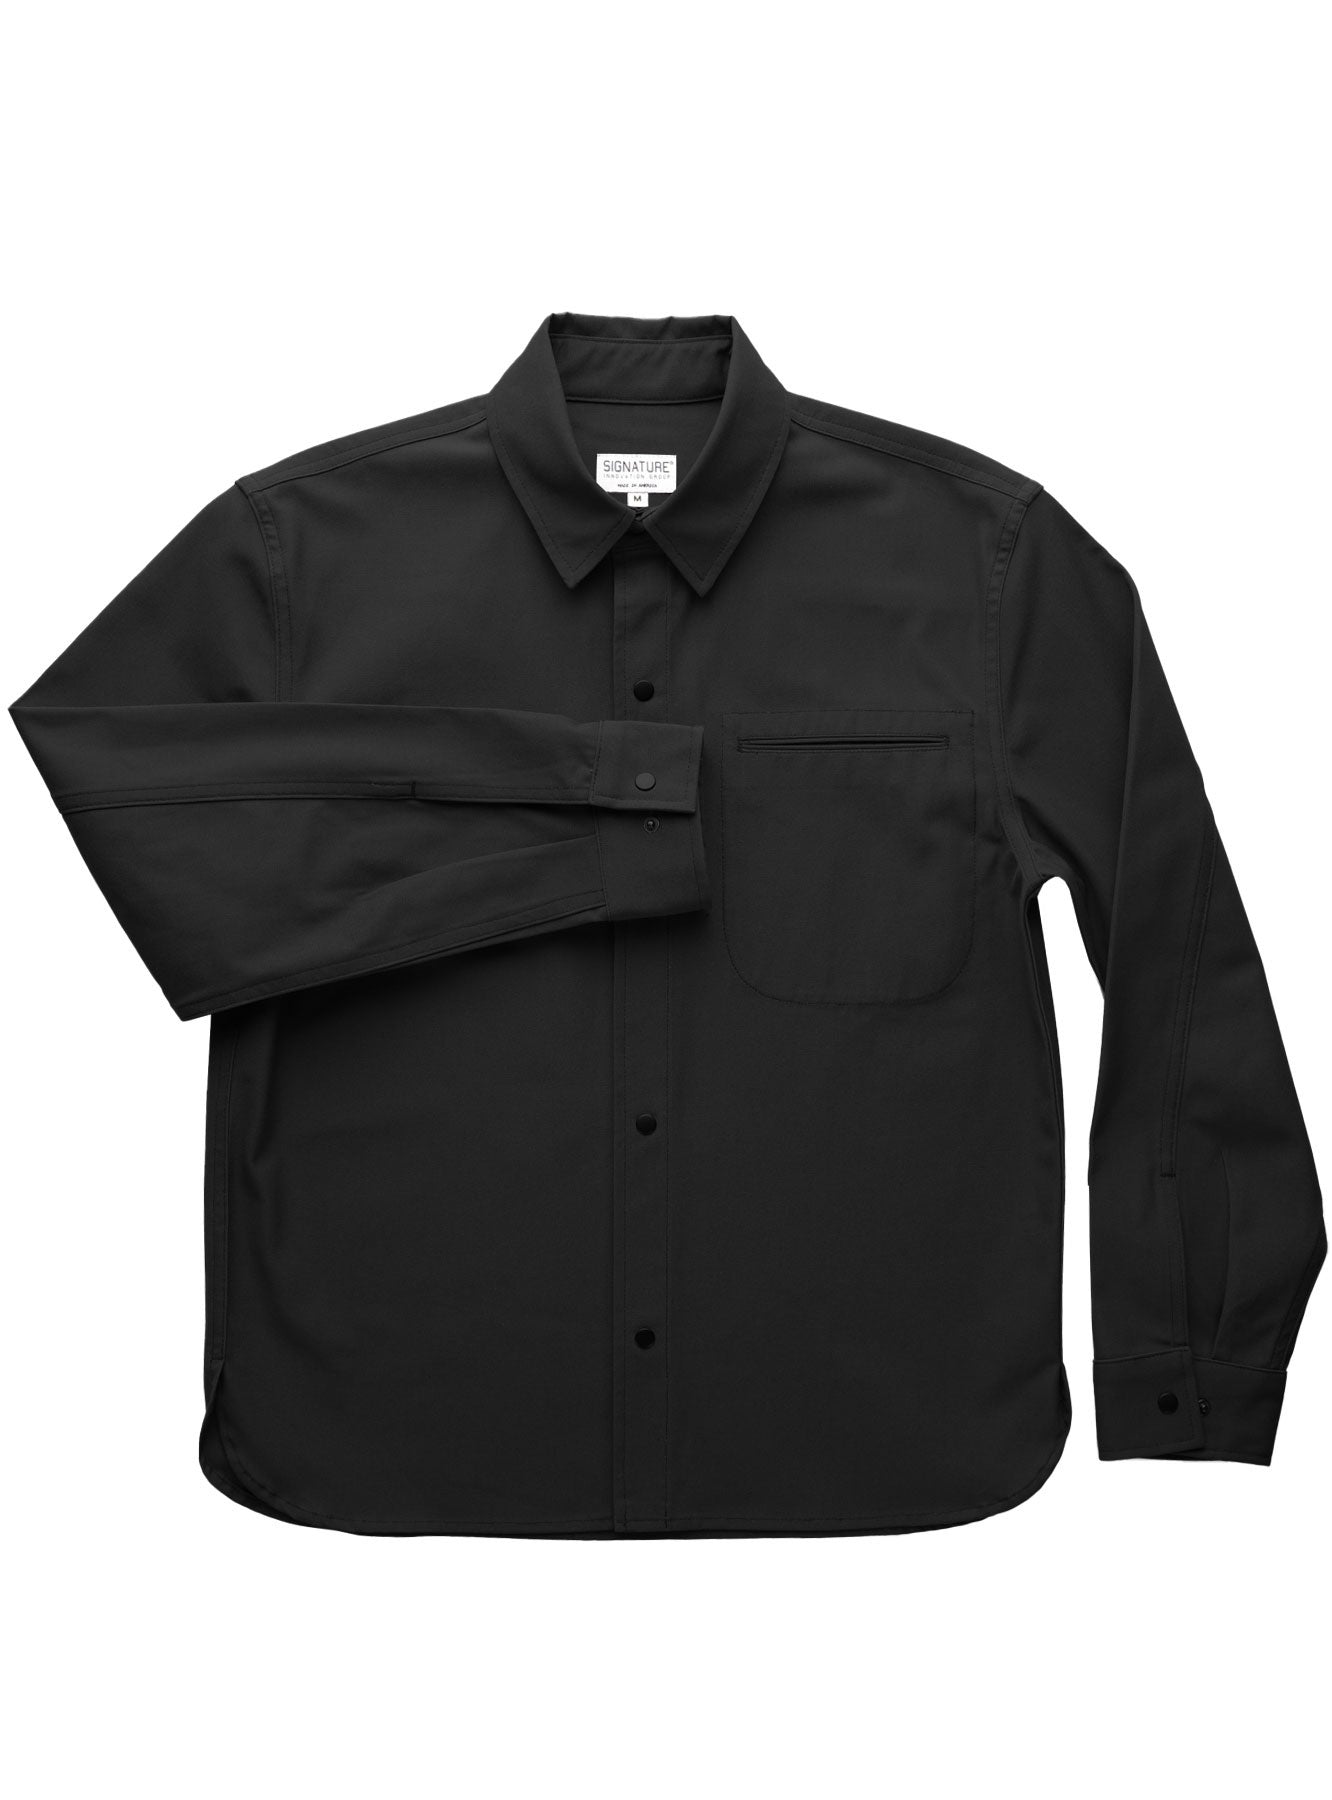 Ranger Shirt Jacket Black